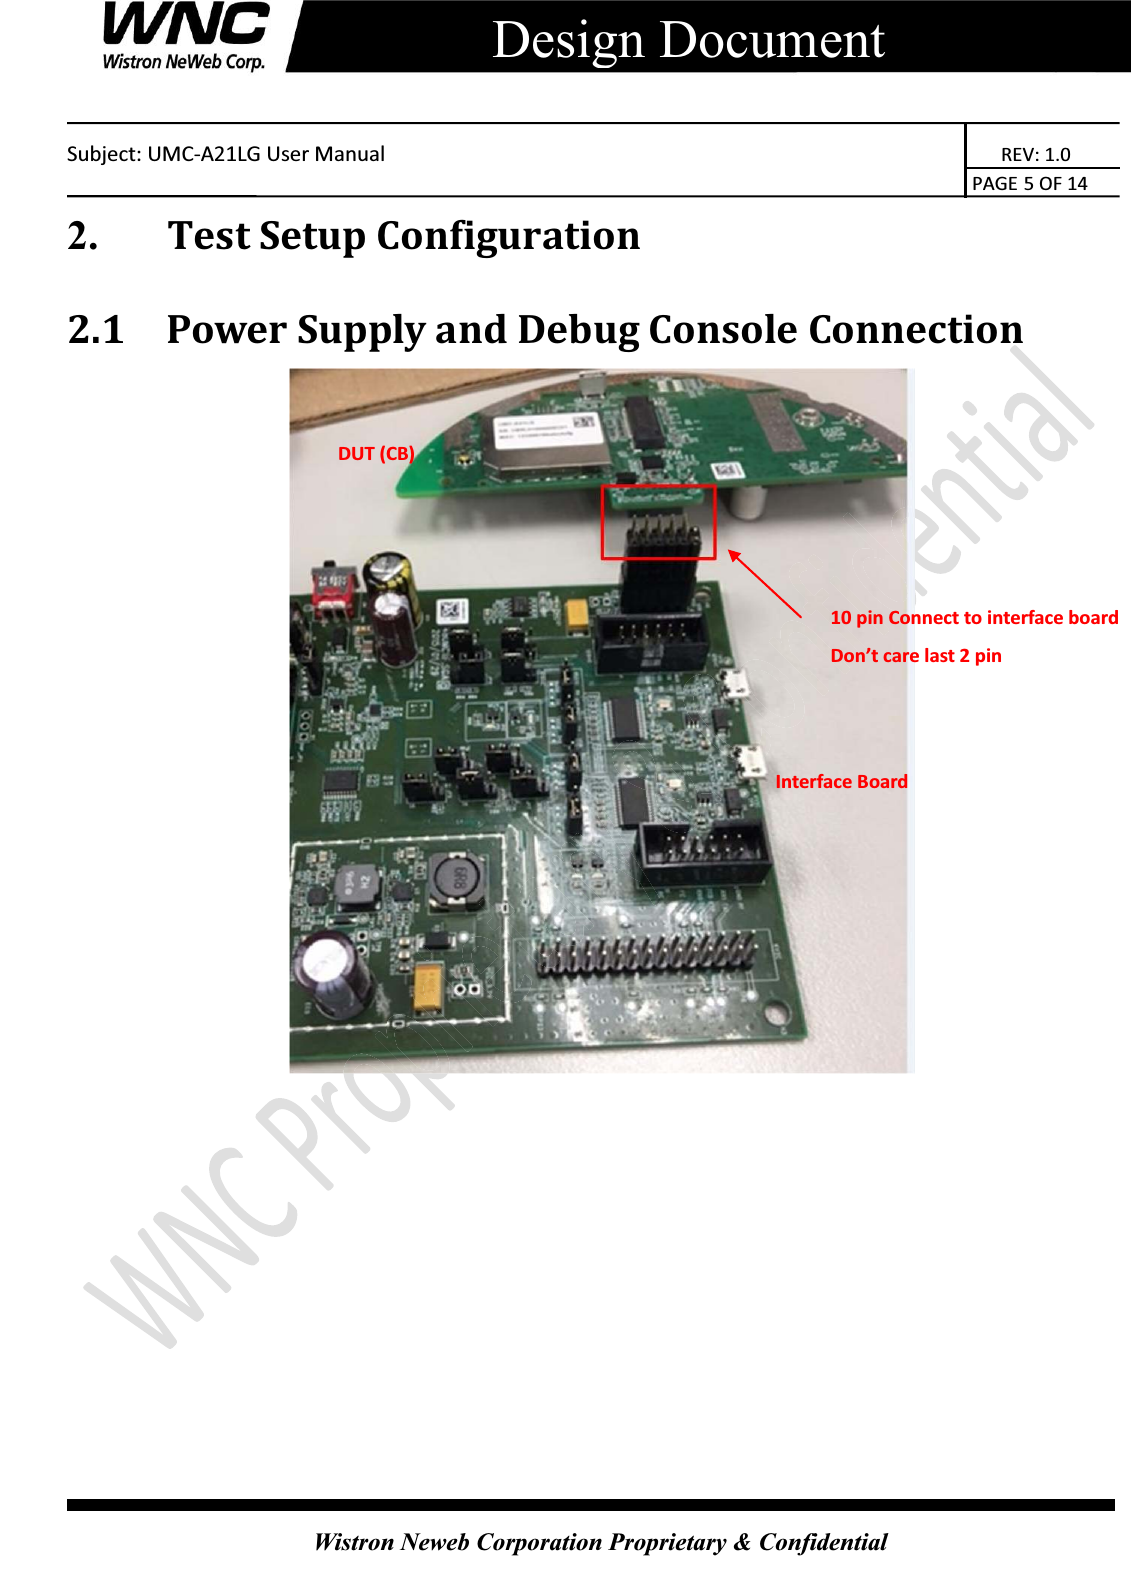    Subject: UMC-A21LG User Manual                                                          REV: 1.0                                                                                        PAGE 5 OF 14  Wistron Neweb Corporation Proprietary &amp; Confidential     Design Document 2.    Test Setup Configuration 2.1 Power Supply and Debug Console Connection  10 pin Connect to interface board ŽŶ͛ƚĐĂƌĞůĂƐƚϮƉŝŶ DUT (CB) Interface Board   